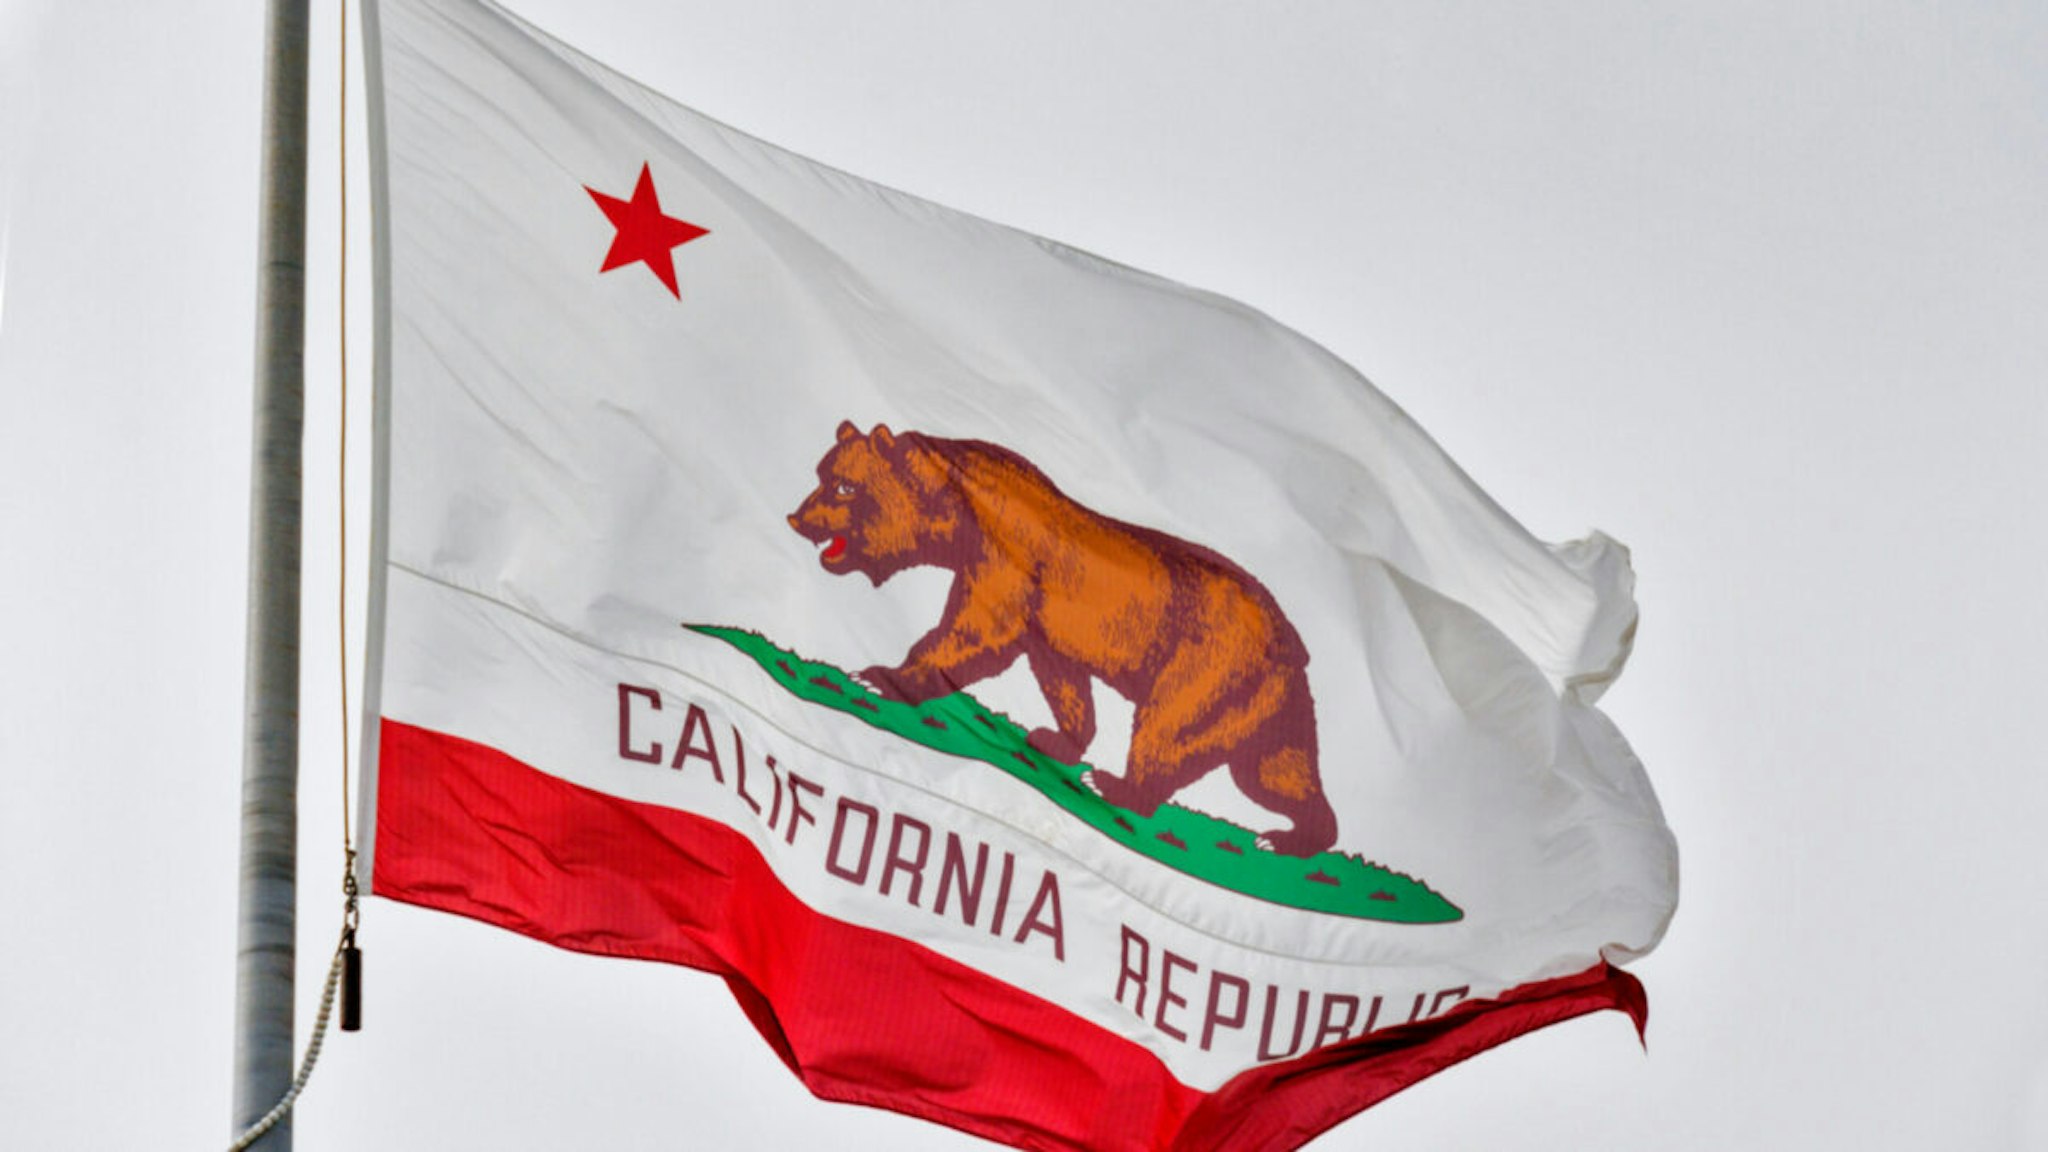 Flag of California, California, USA - stock photo.